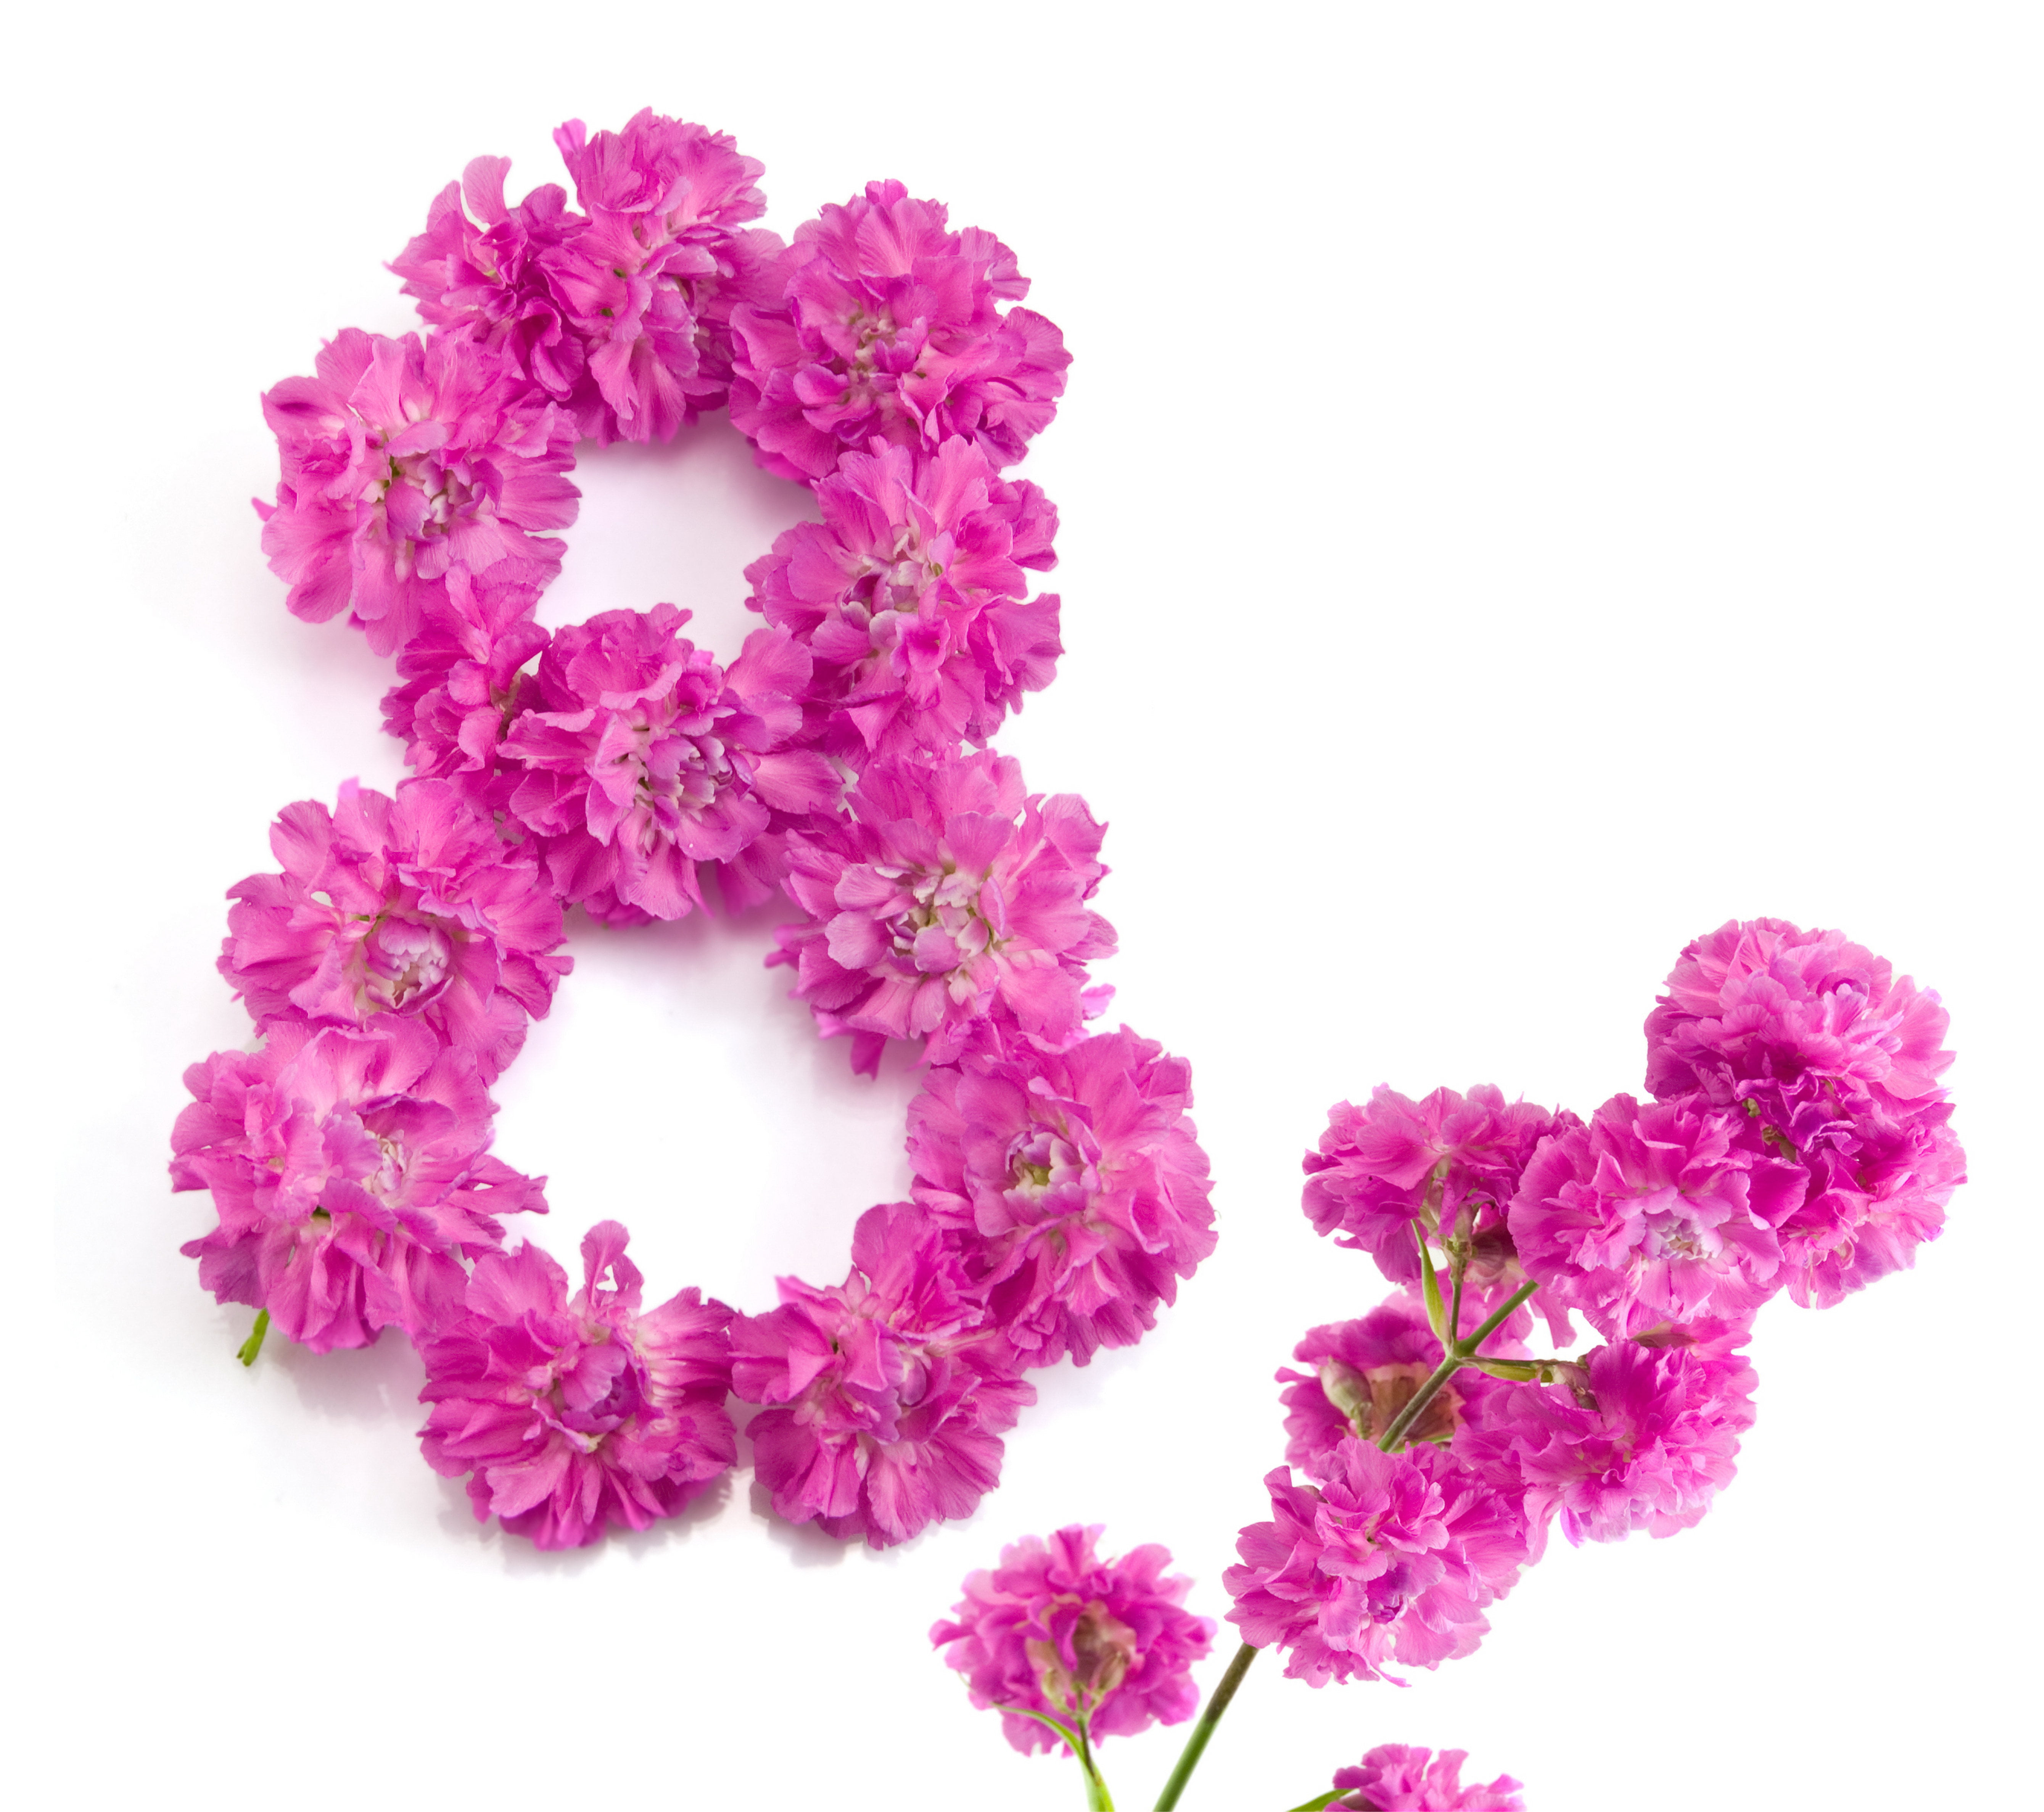 two pink petaled flower crowns, flowers, March 8, international women's day